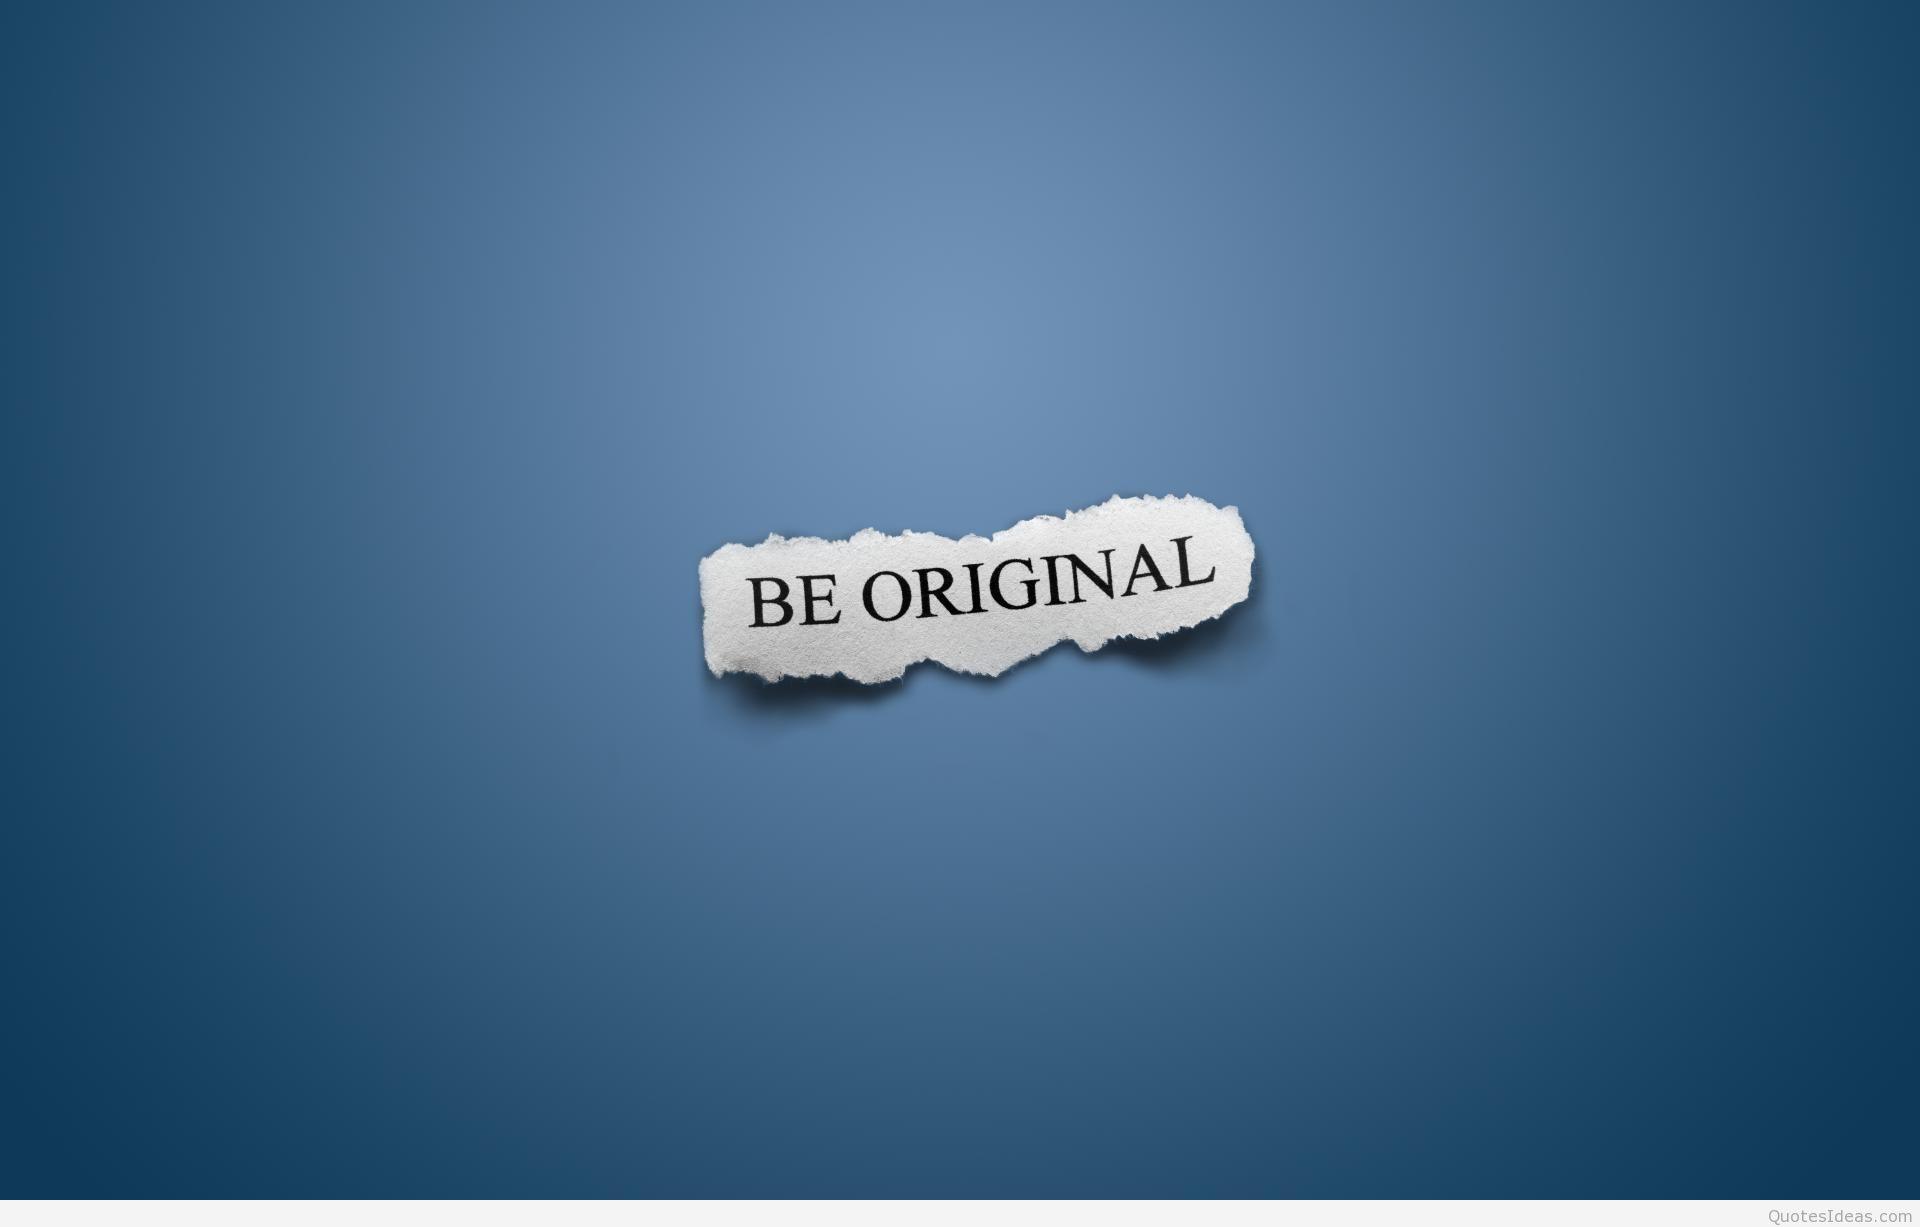 Be original motivational quote wallpaper hd